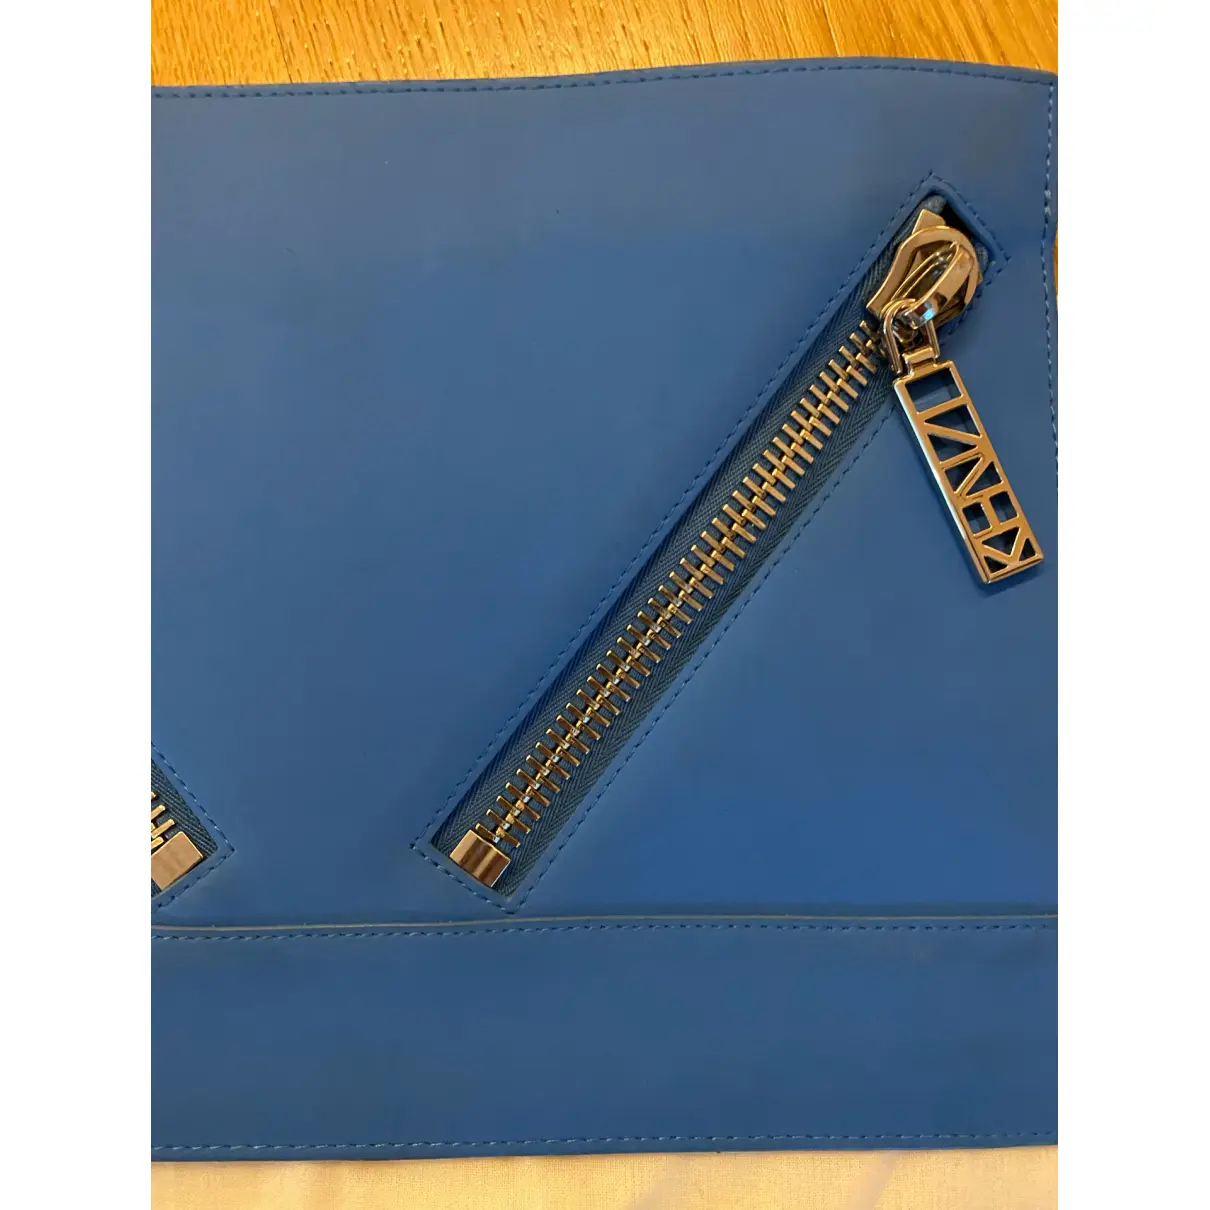 Buy Kenzo Kalifornia leather clutch bag online